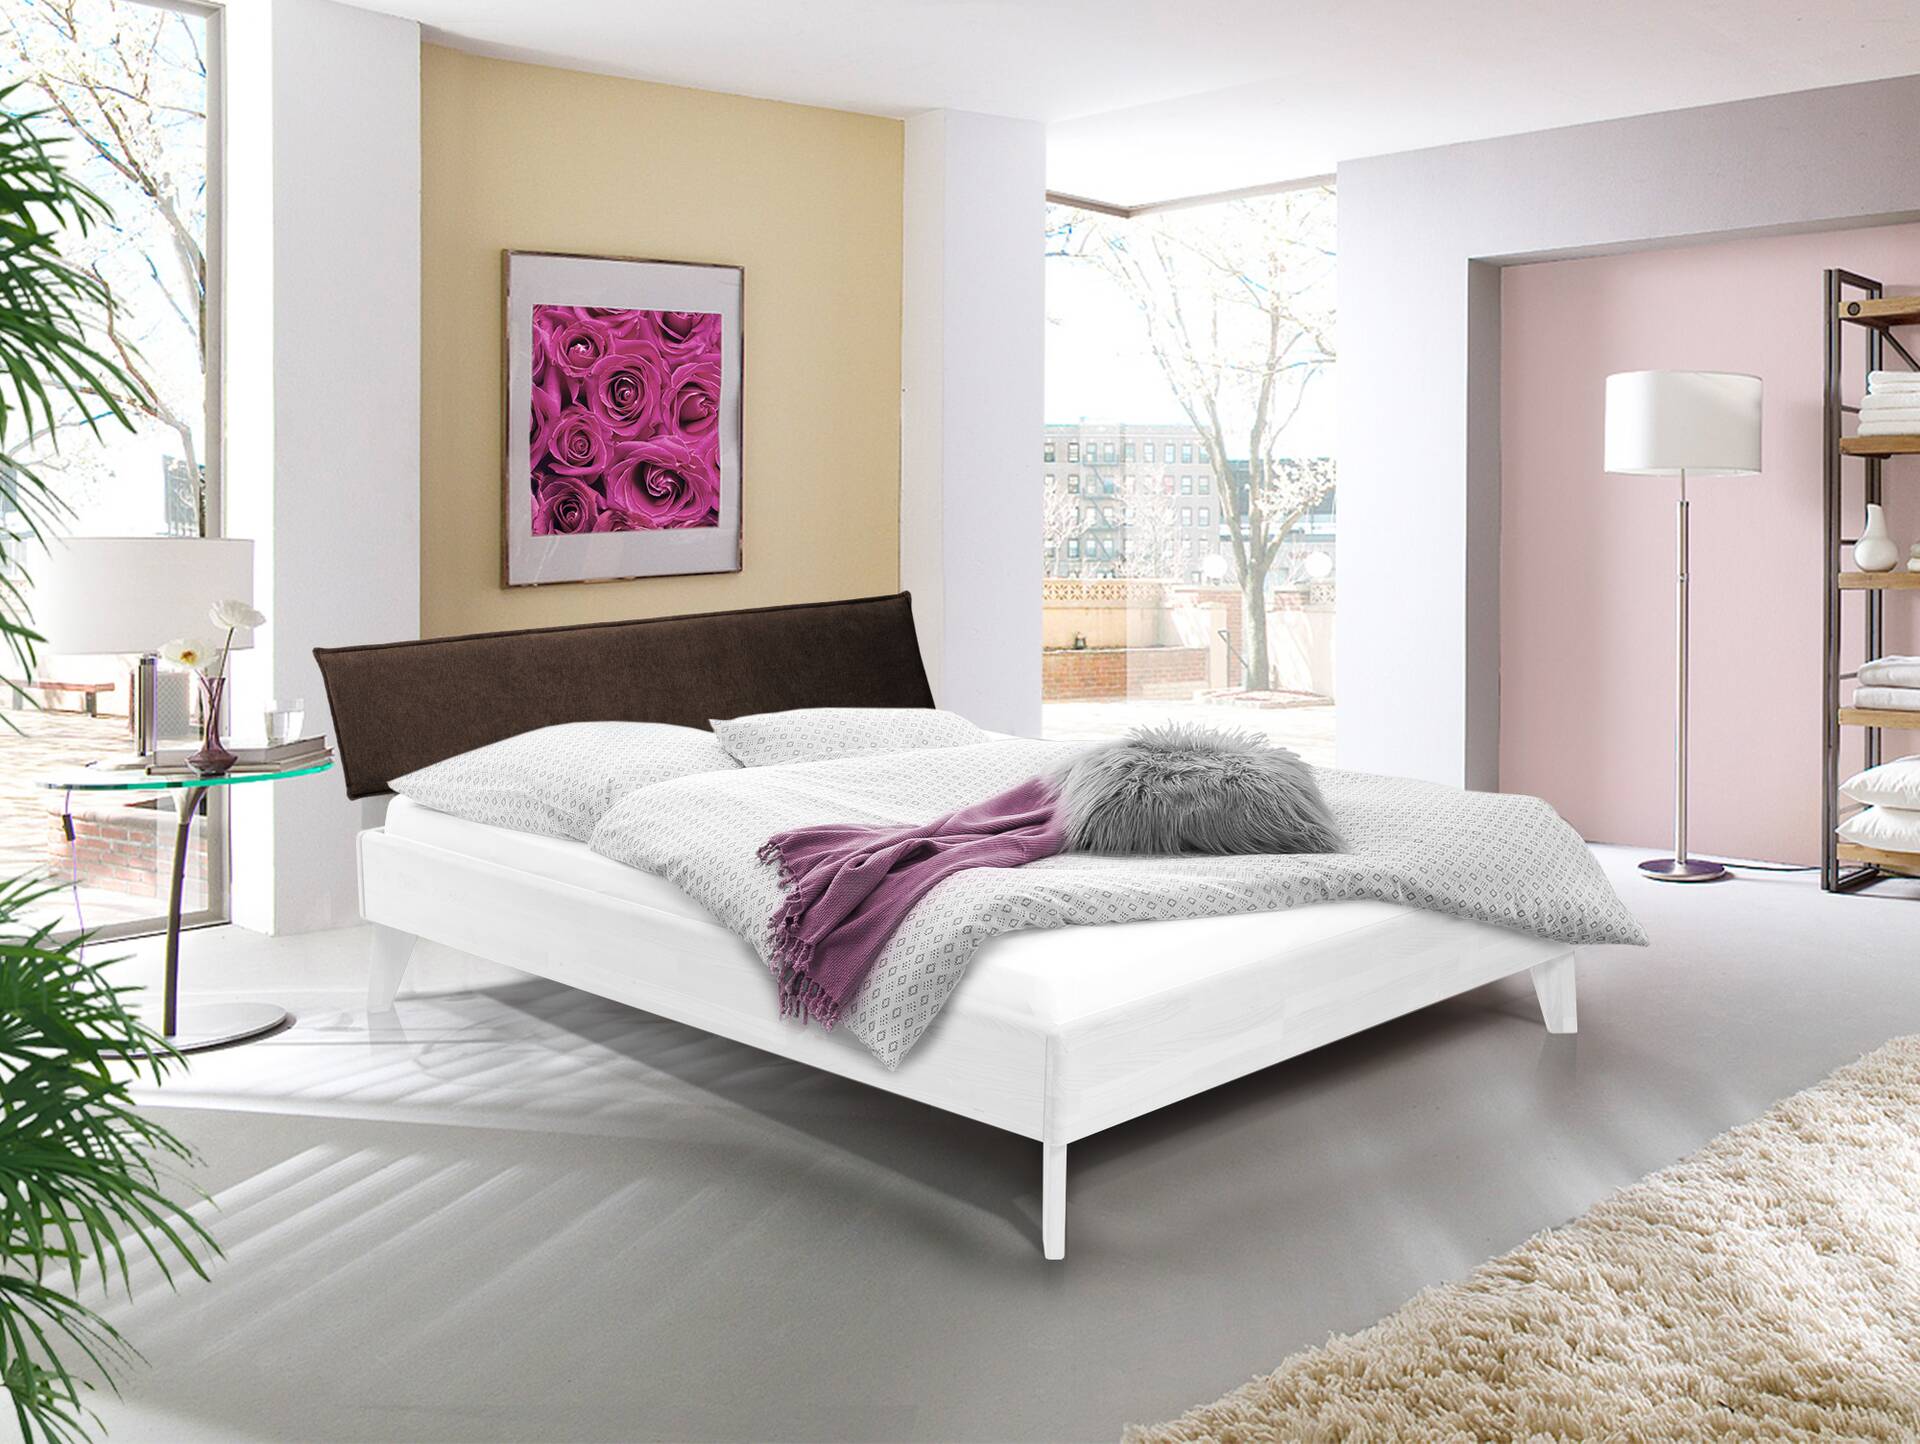 CALIDO 4-Fuß-Bett mit Polster-Kopfteil, Material Massivholz 90 x 220 cm | Buche weiss lackiert | Stoff Braun | Standardhöhe